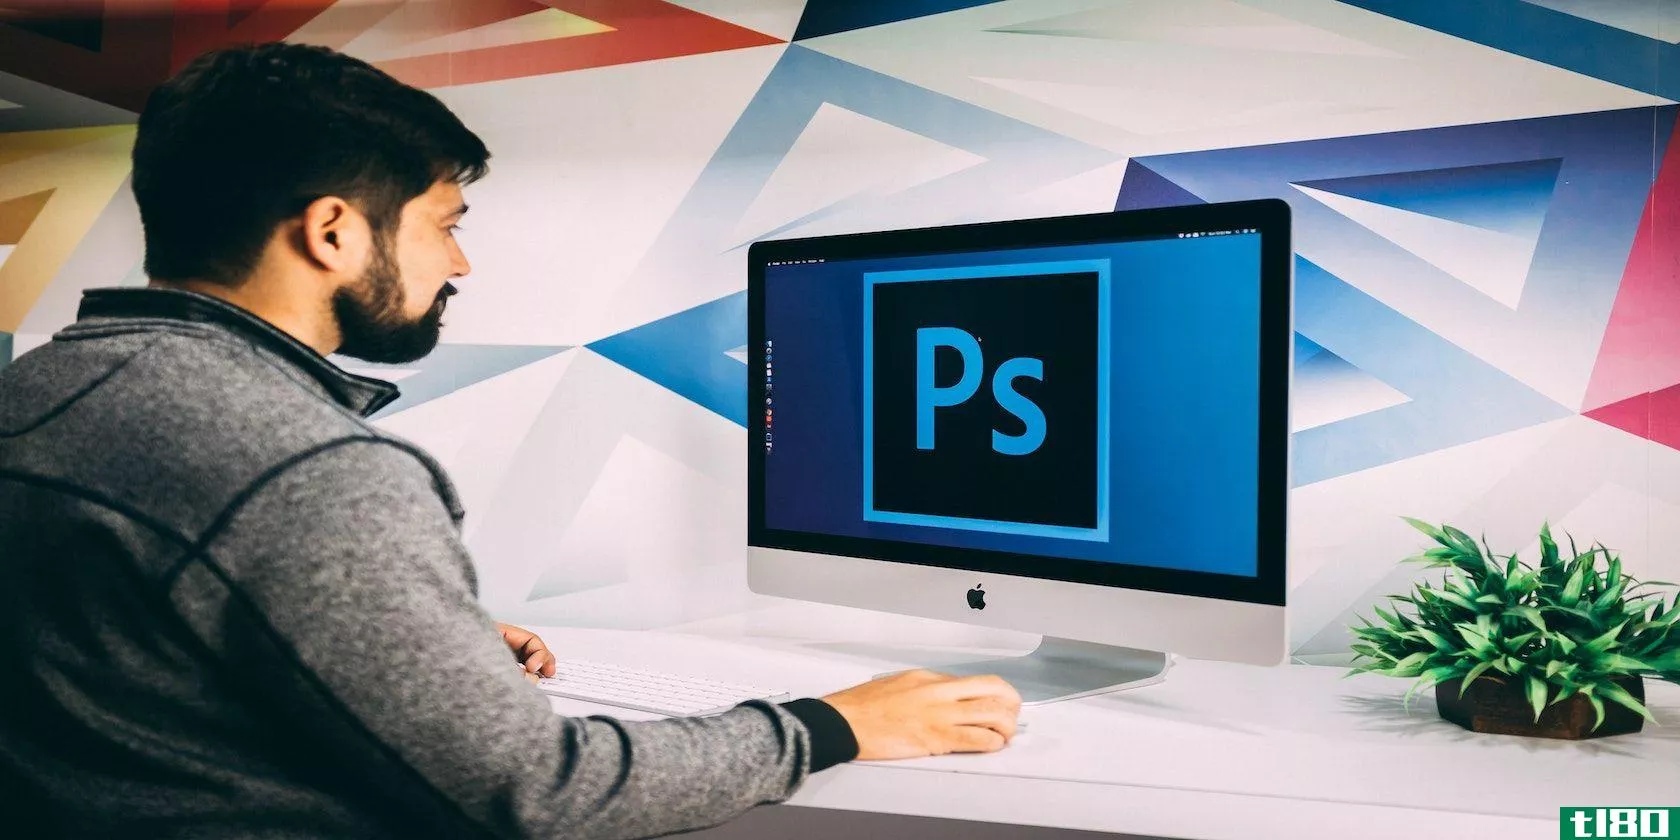 user using Adobe Photoshop on computer